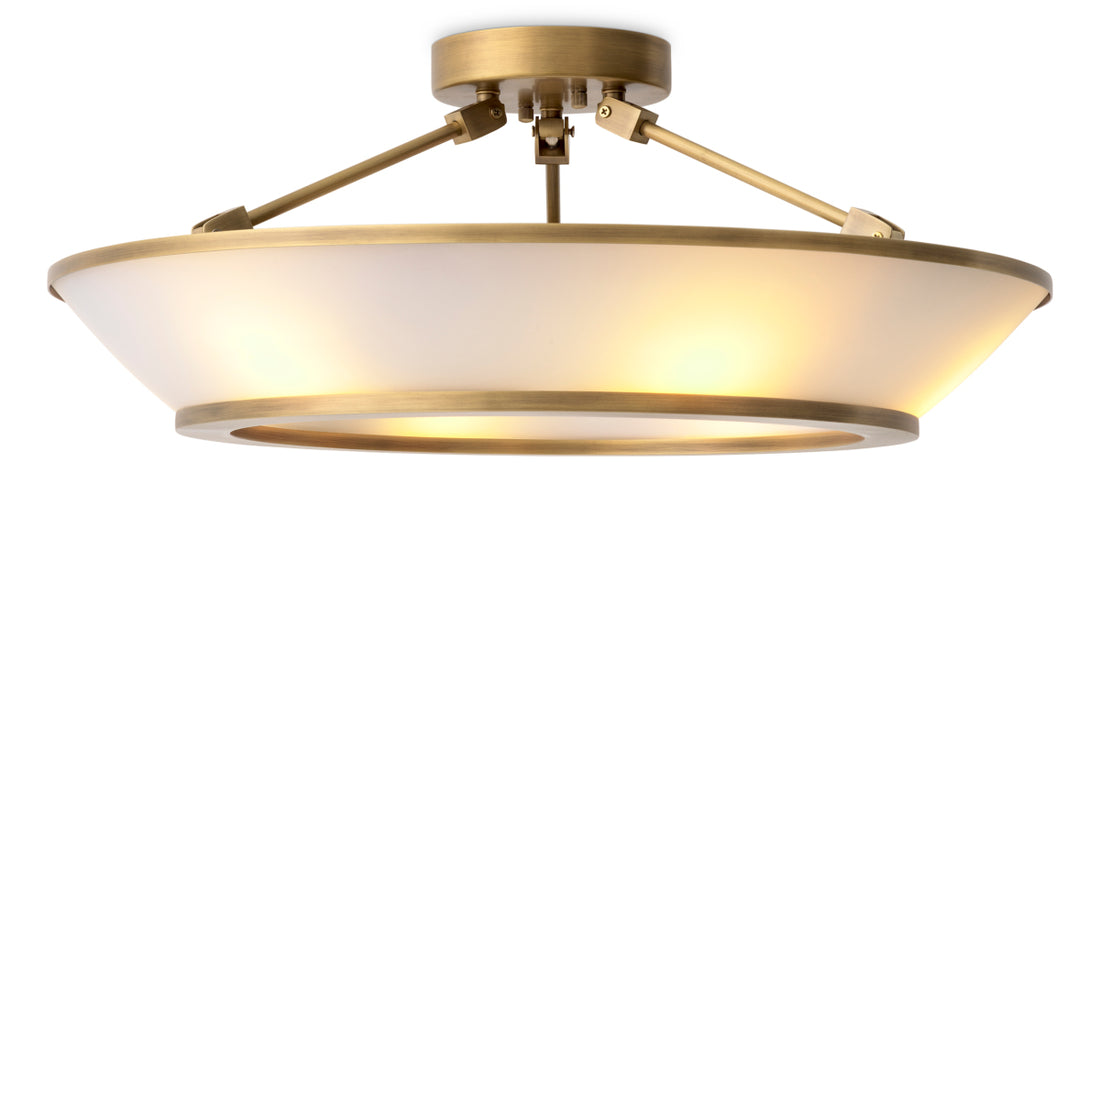 Ceiling Lamp Ferette antique brass finish